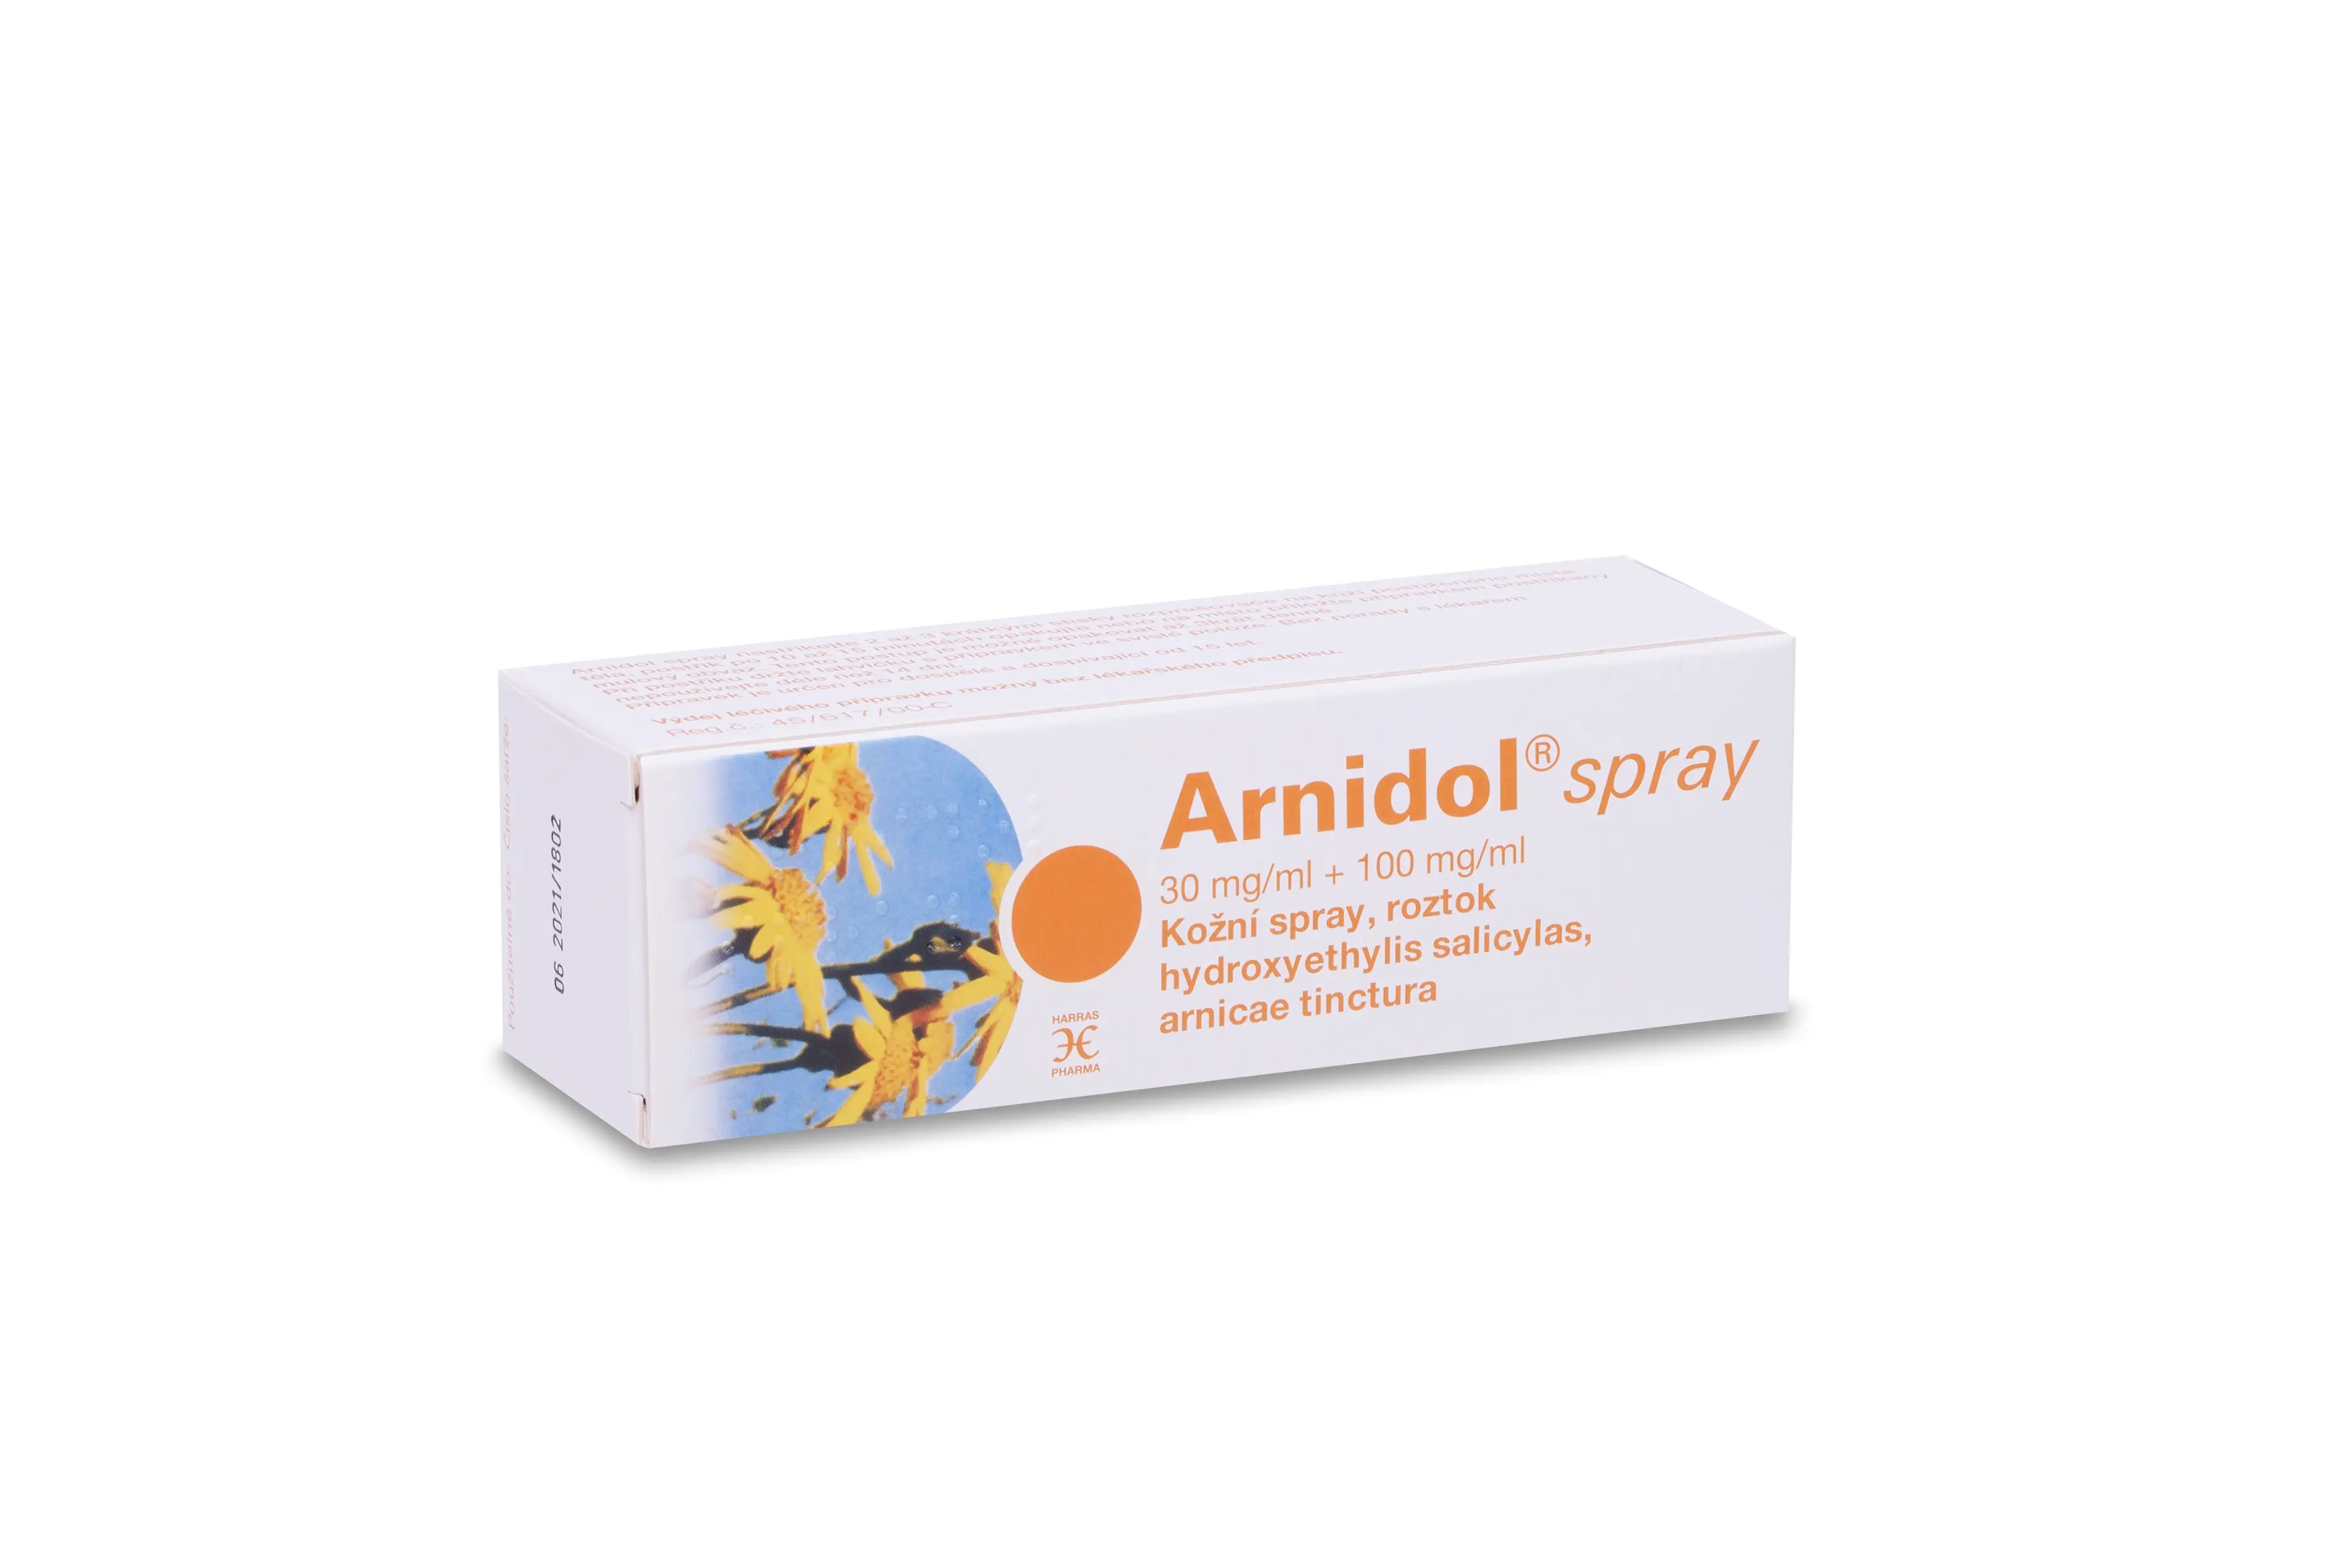 Arnidol spray drm.spr.sol.100 ml x 3 mg/10 mg